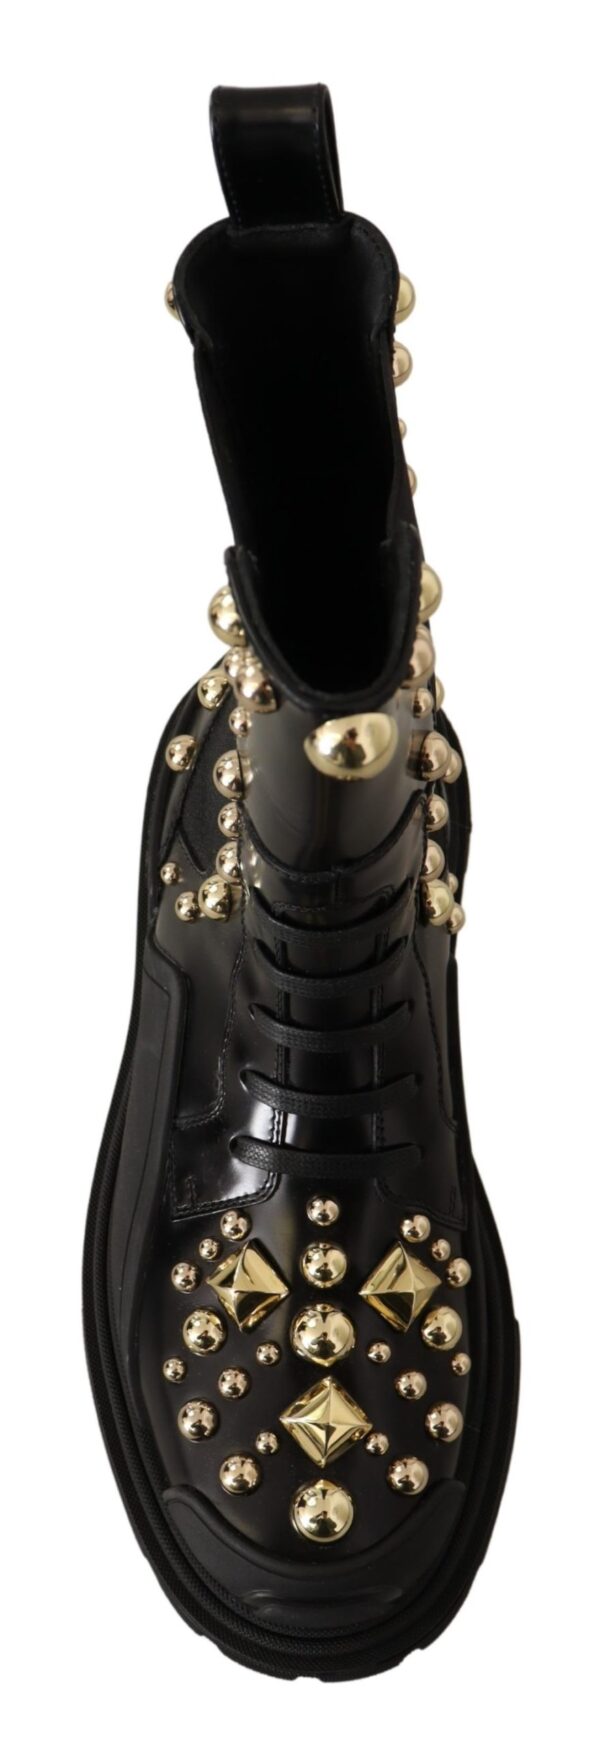 Black Leather Studded Combat Boots Shoes Cizme